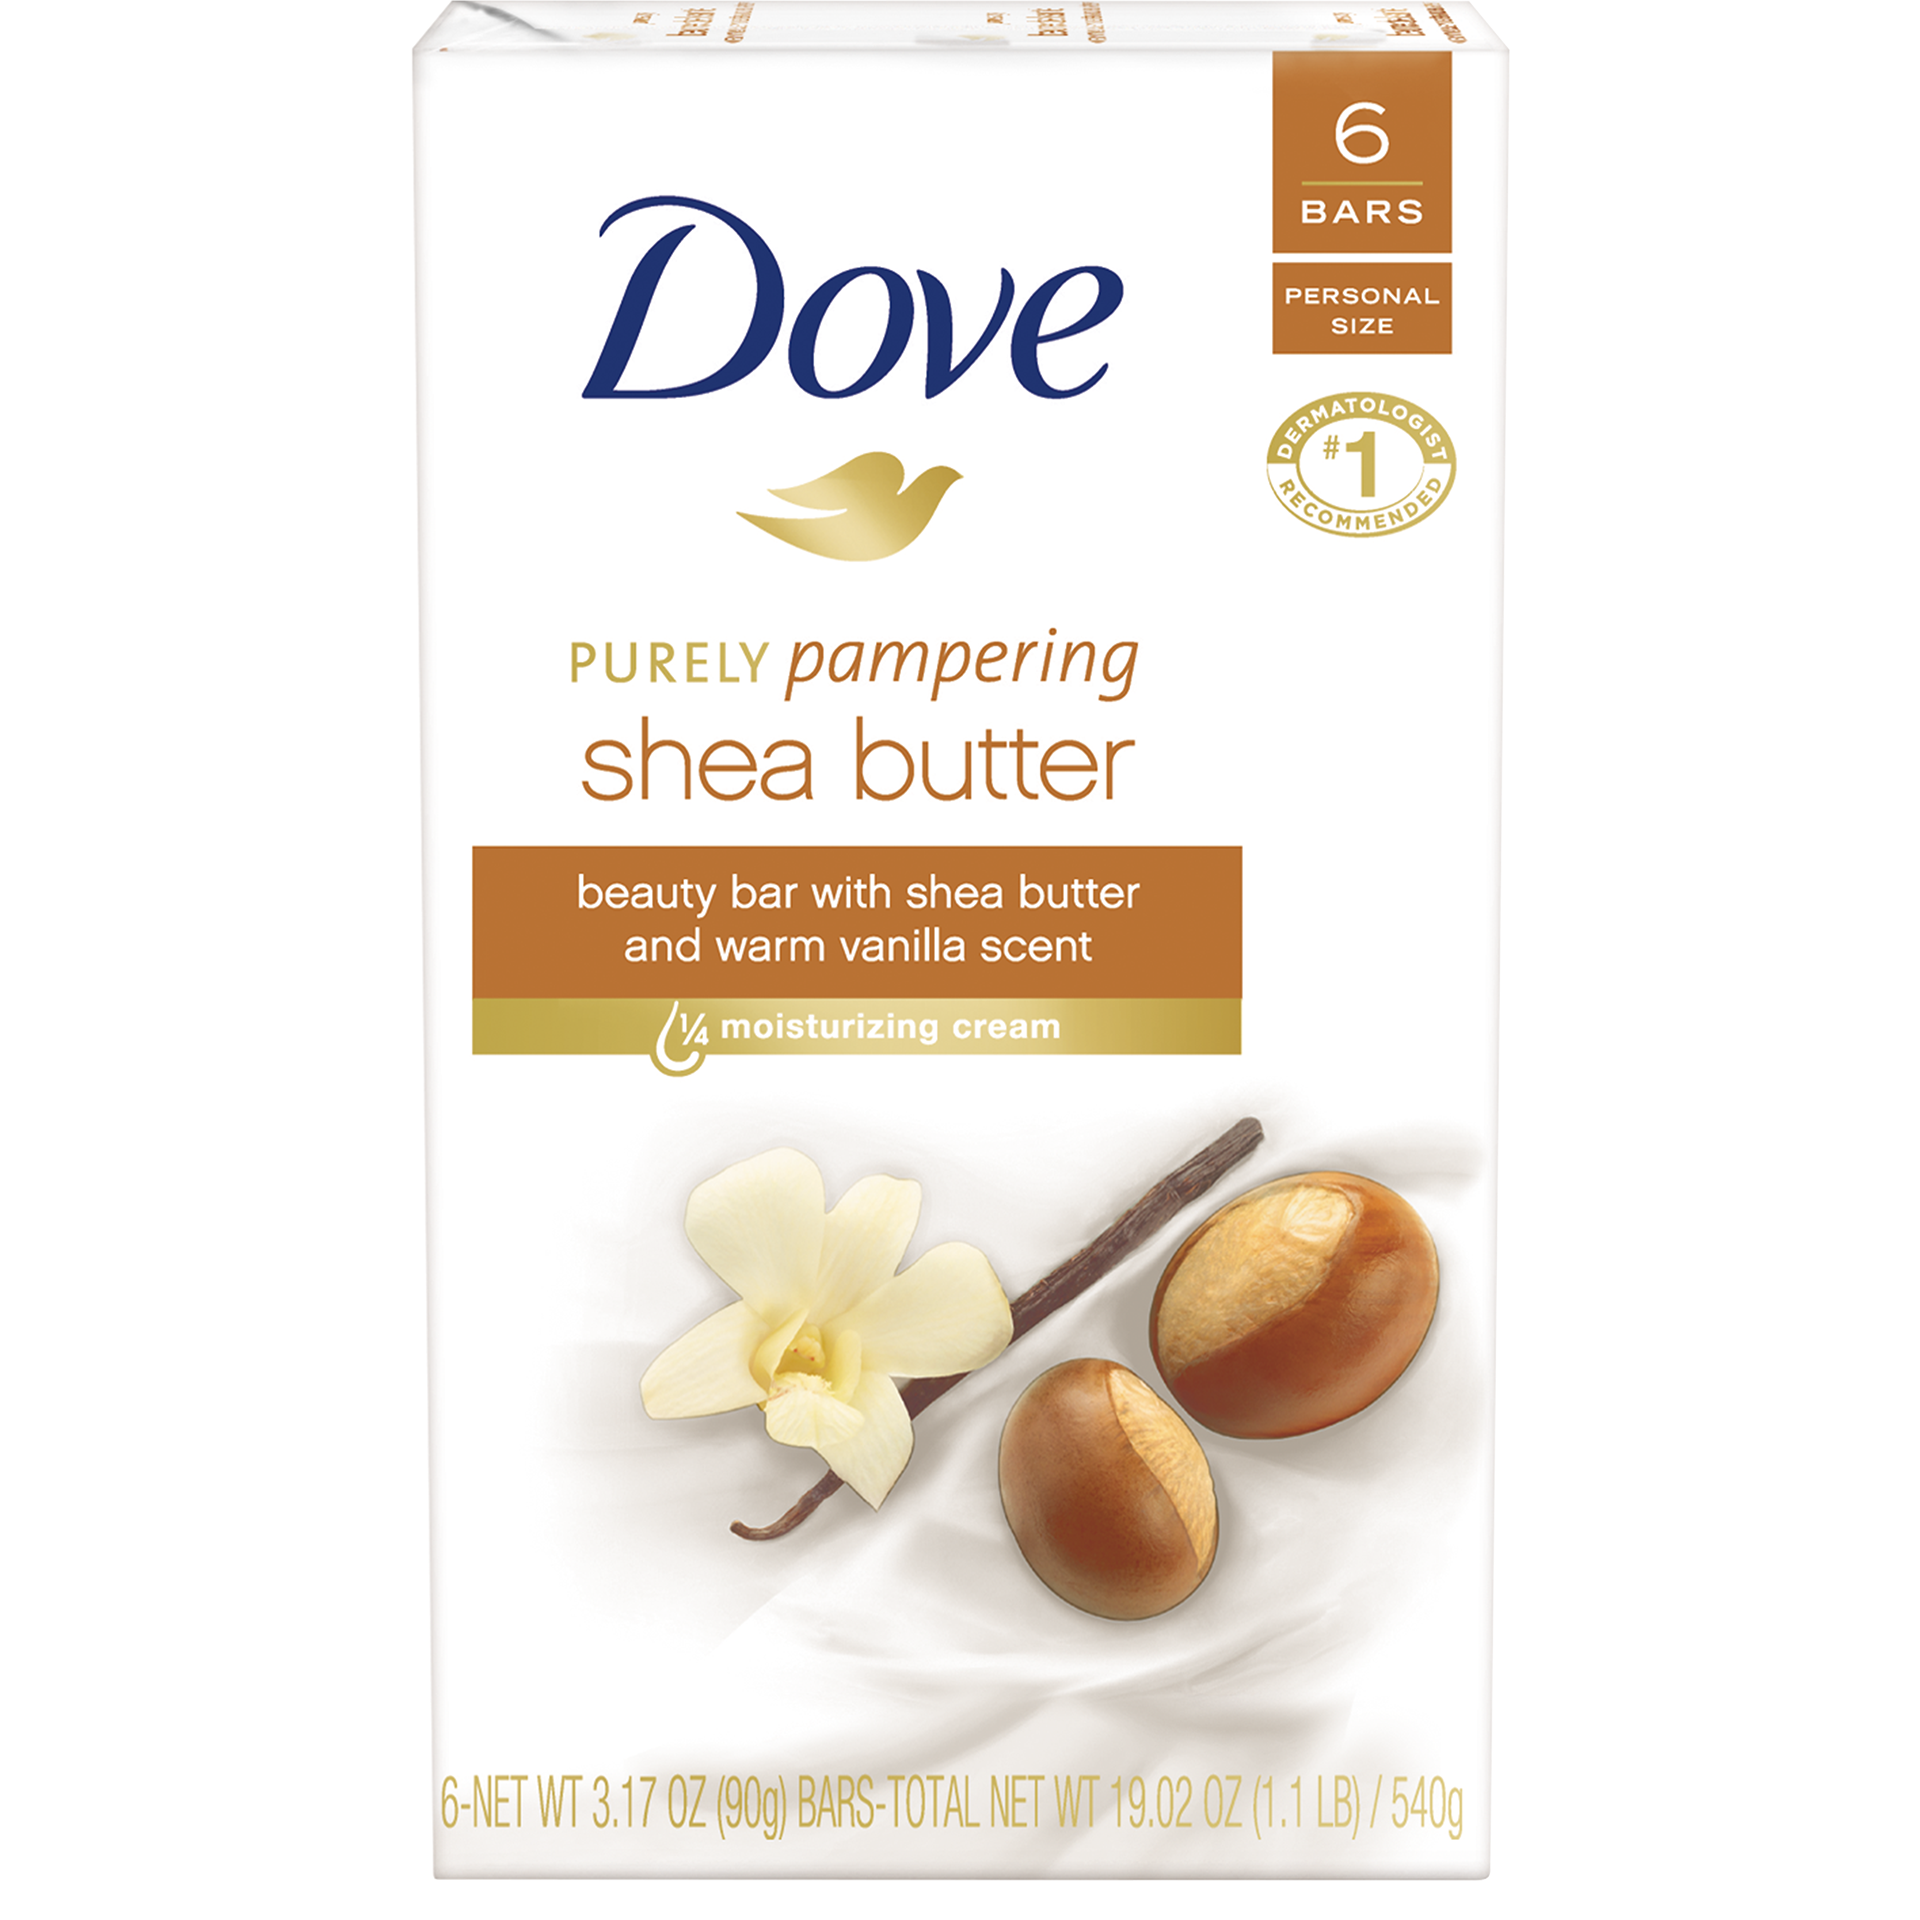 Dove Purely Pampering Shea Butter Beauty Bar 4 oz 6pk